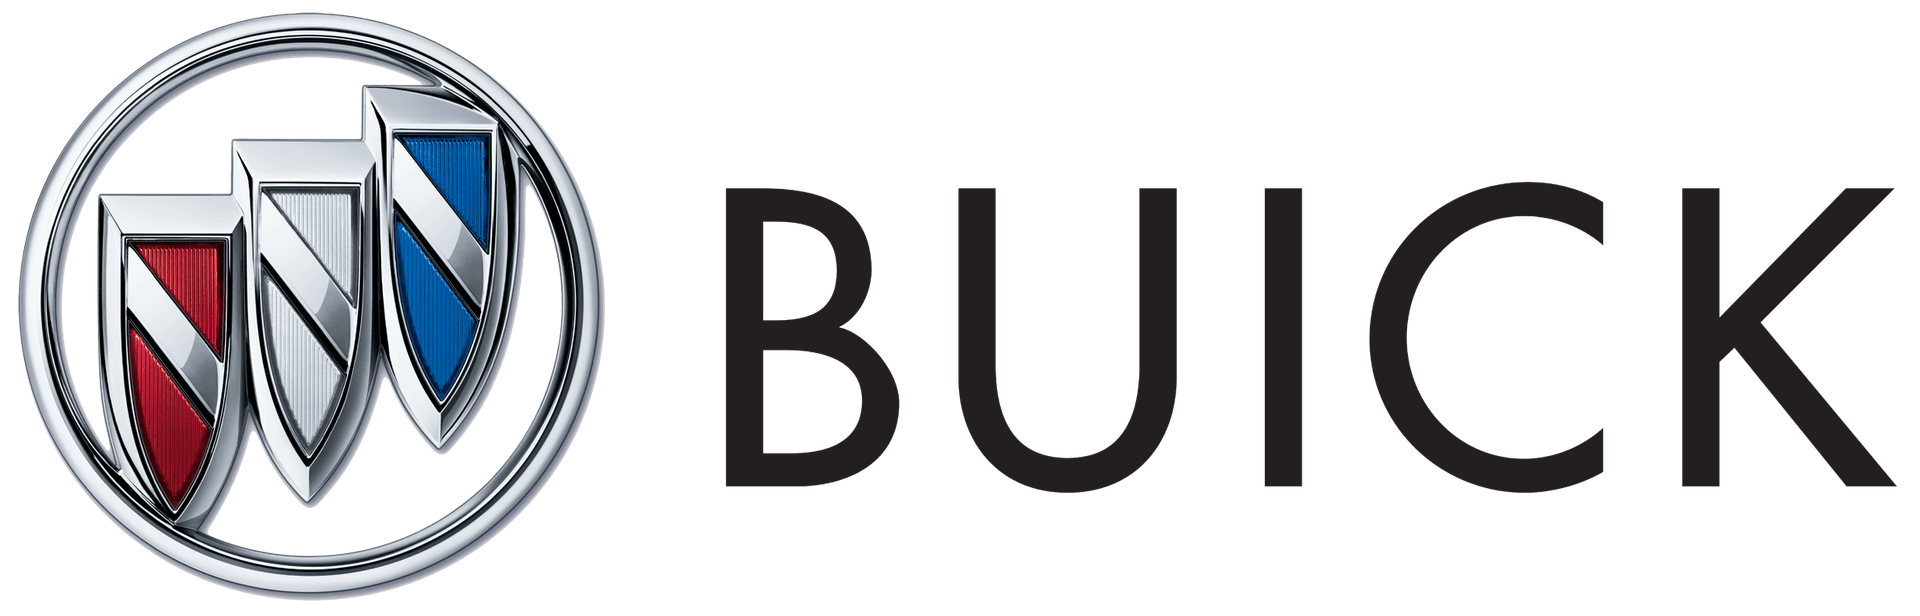 marketing strategy of Buick - logo